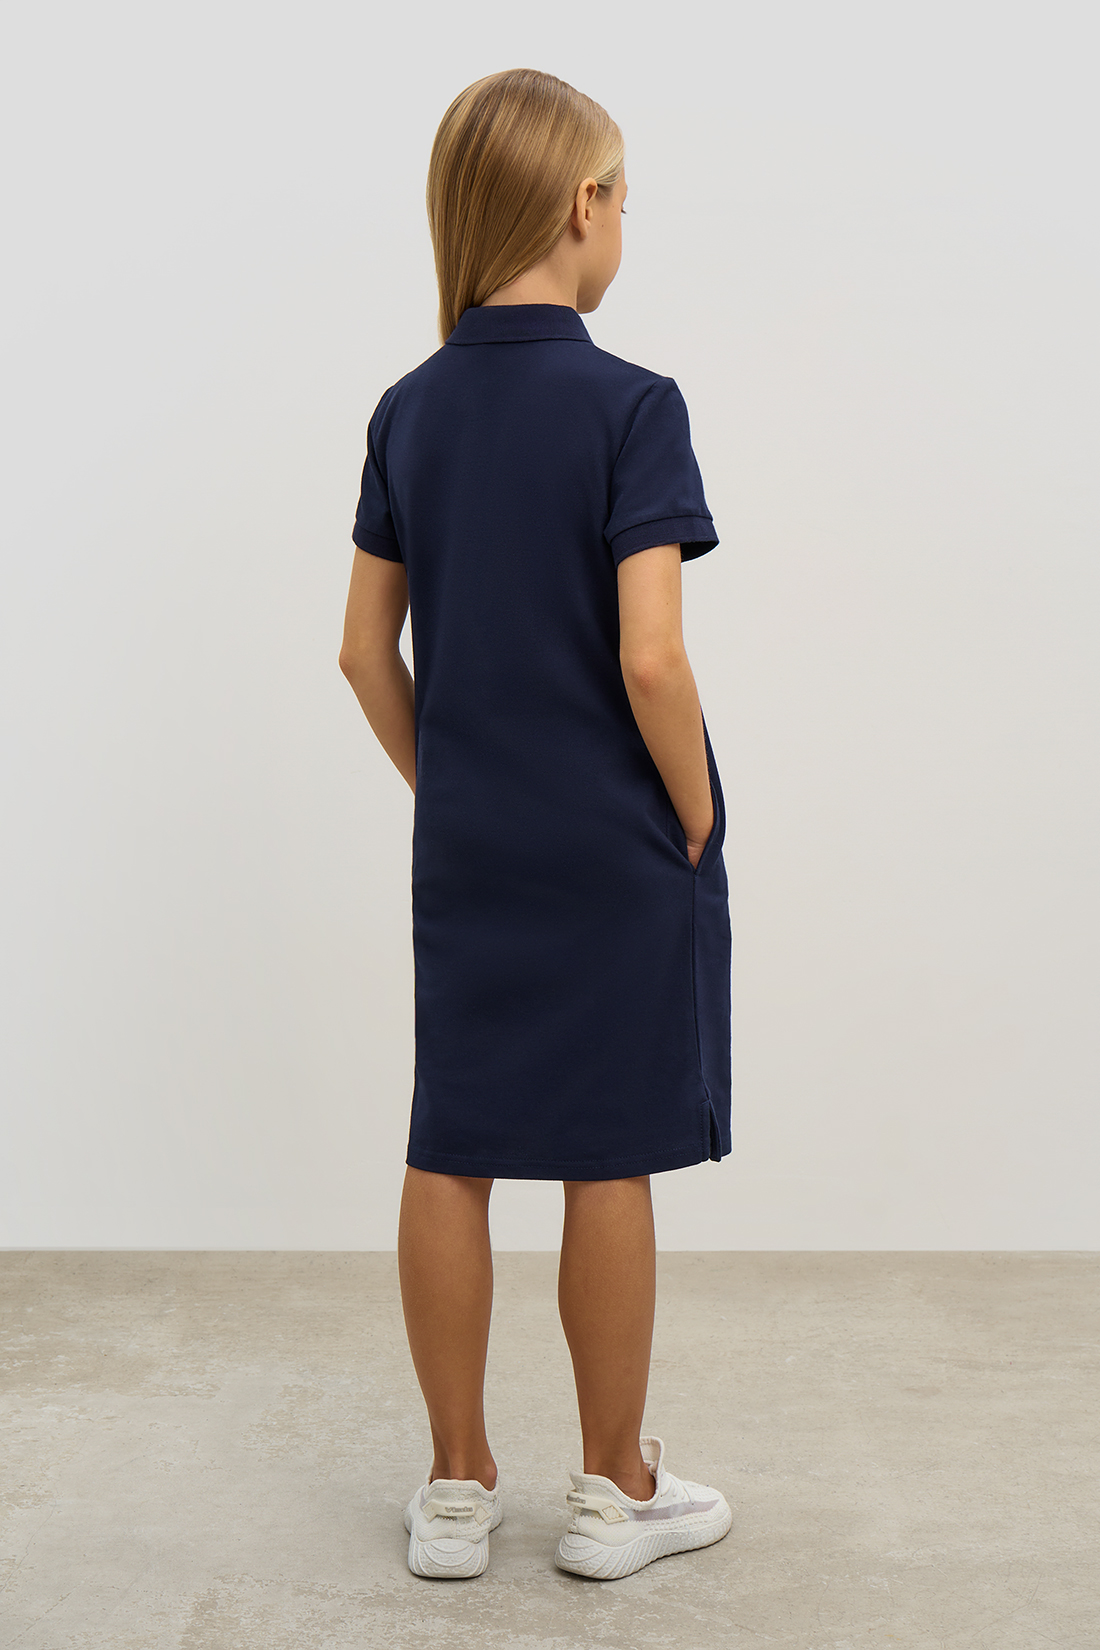 Платье-поло для девочки (арт. baon BK451201), размер 122, цвет синий Платье-поло для девочки (арт. baon BK451201) - фото 3